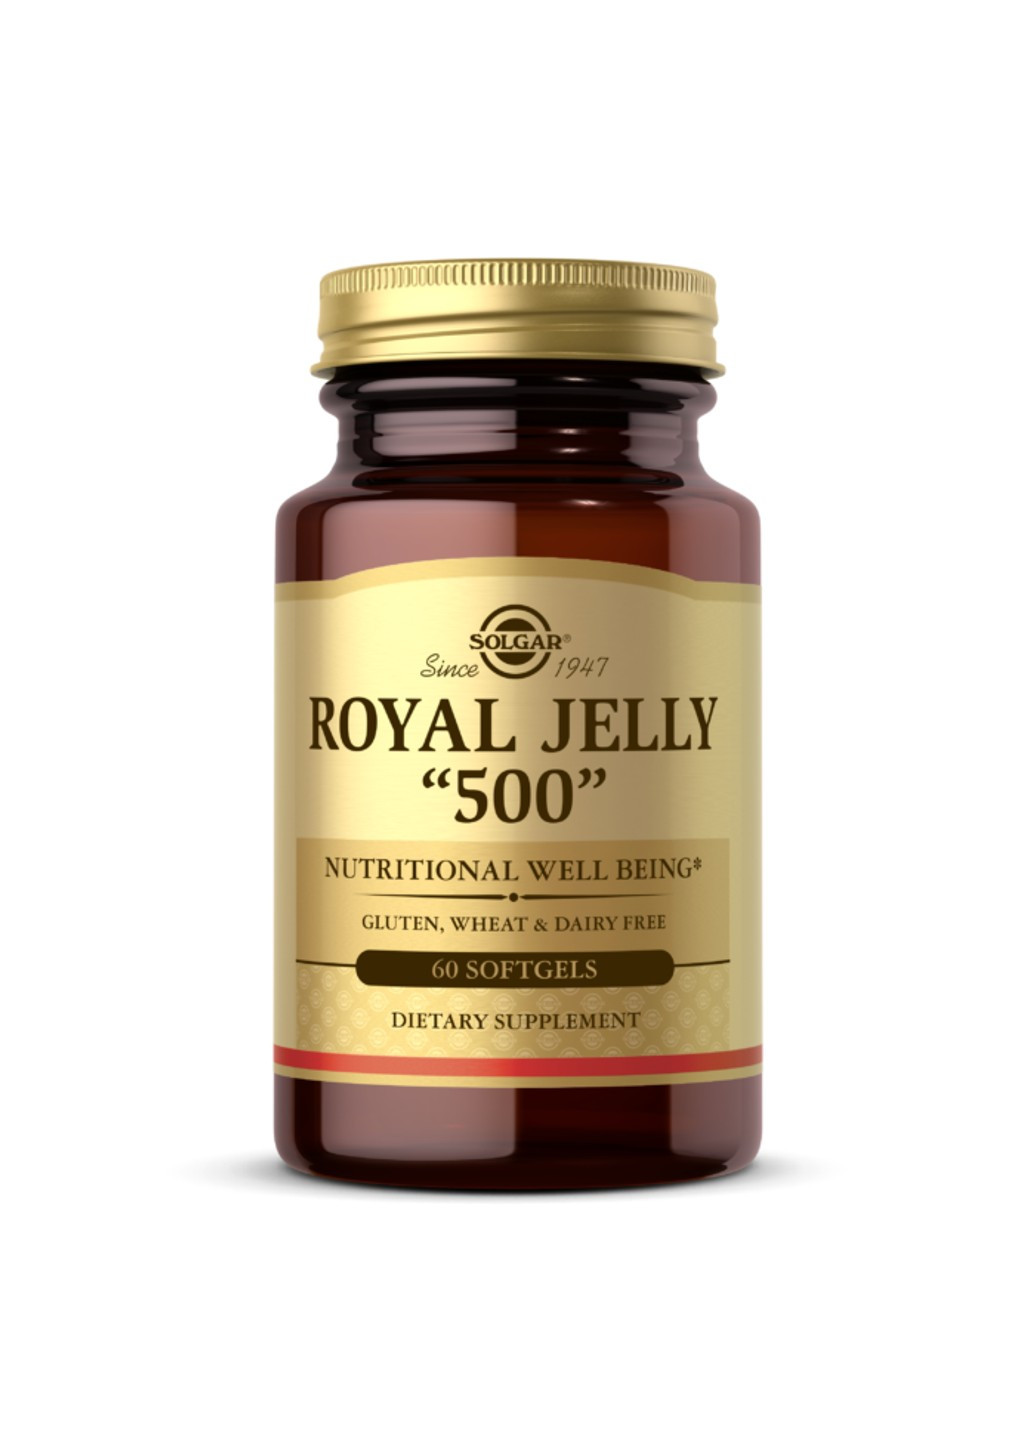 Маточное молочко Royal Jelly "500" 60 Softgels солгар Solgar (255407900)